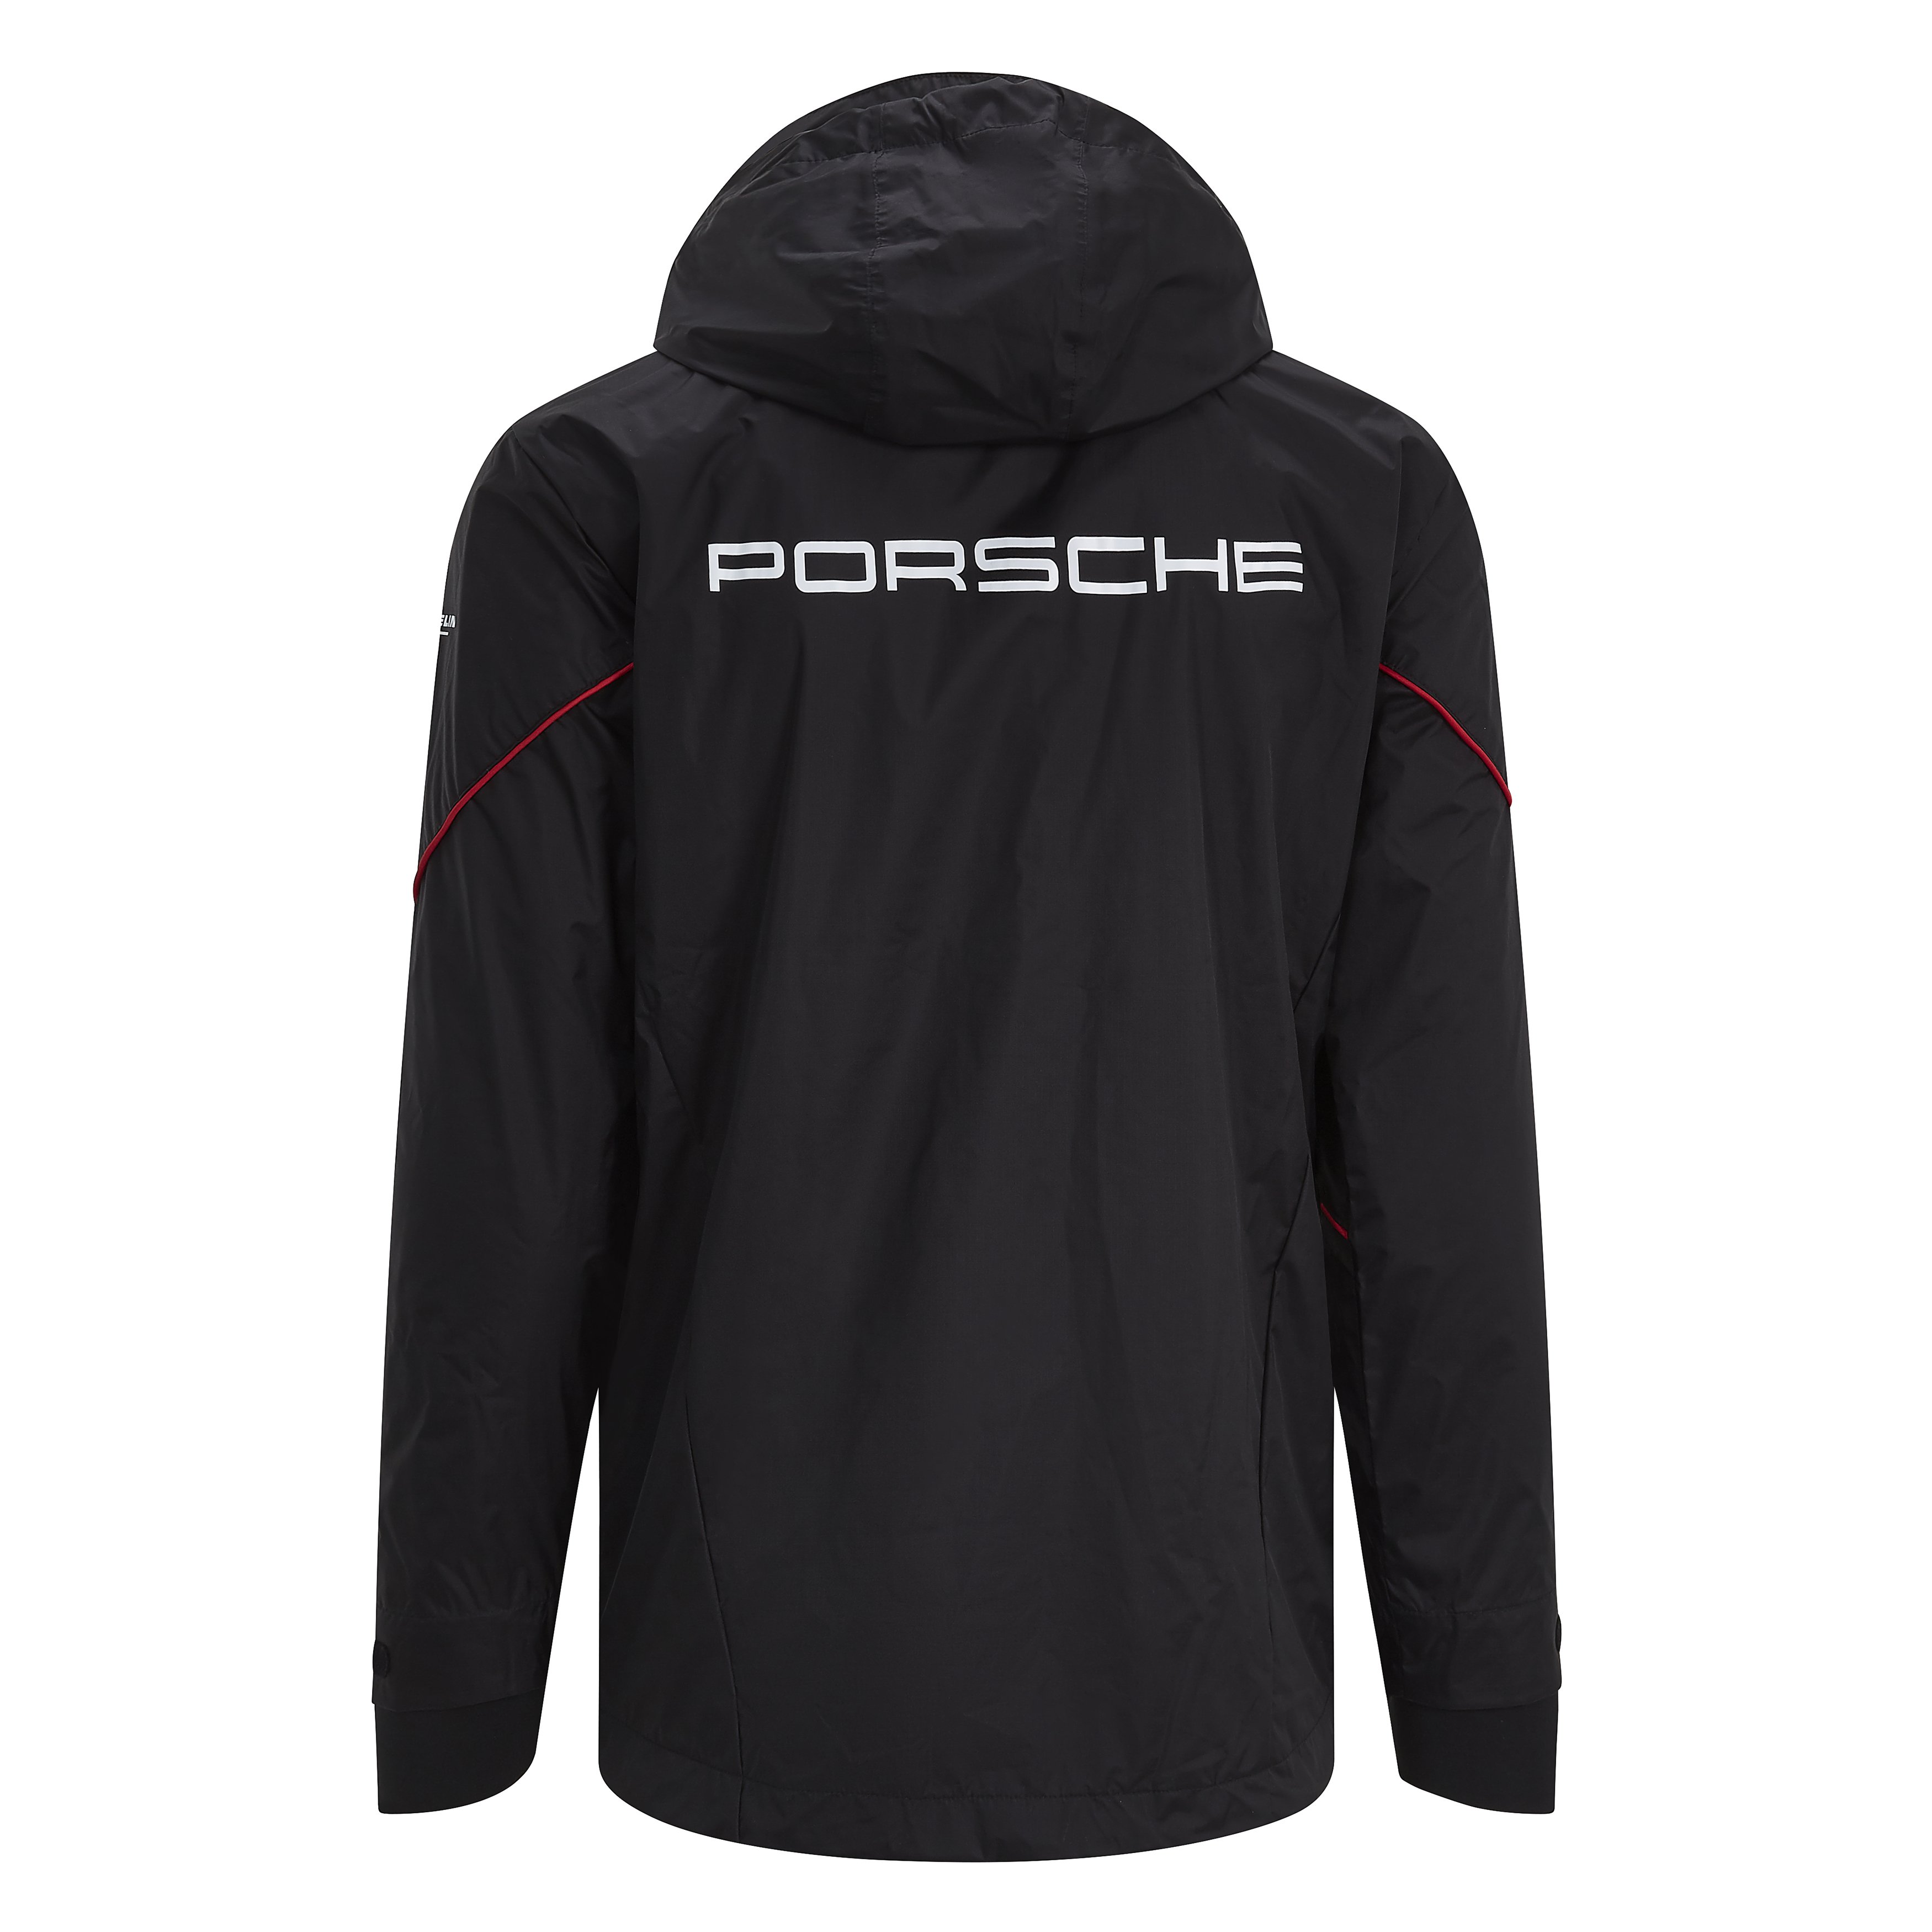 Porsche Motorsport Team Rain Jacket Black - image 2 of 5